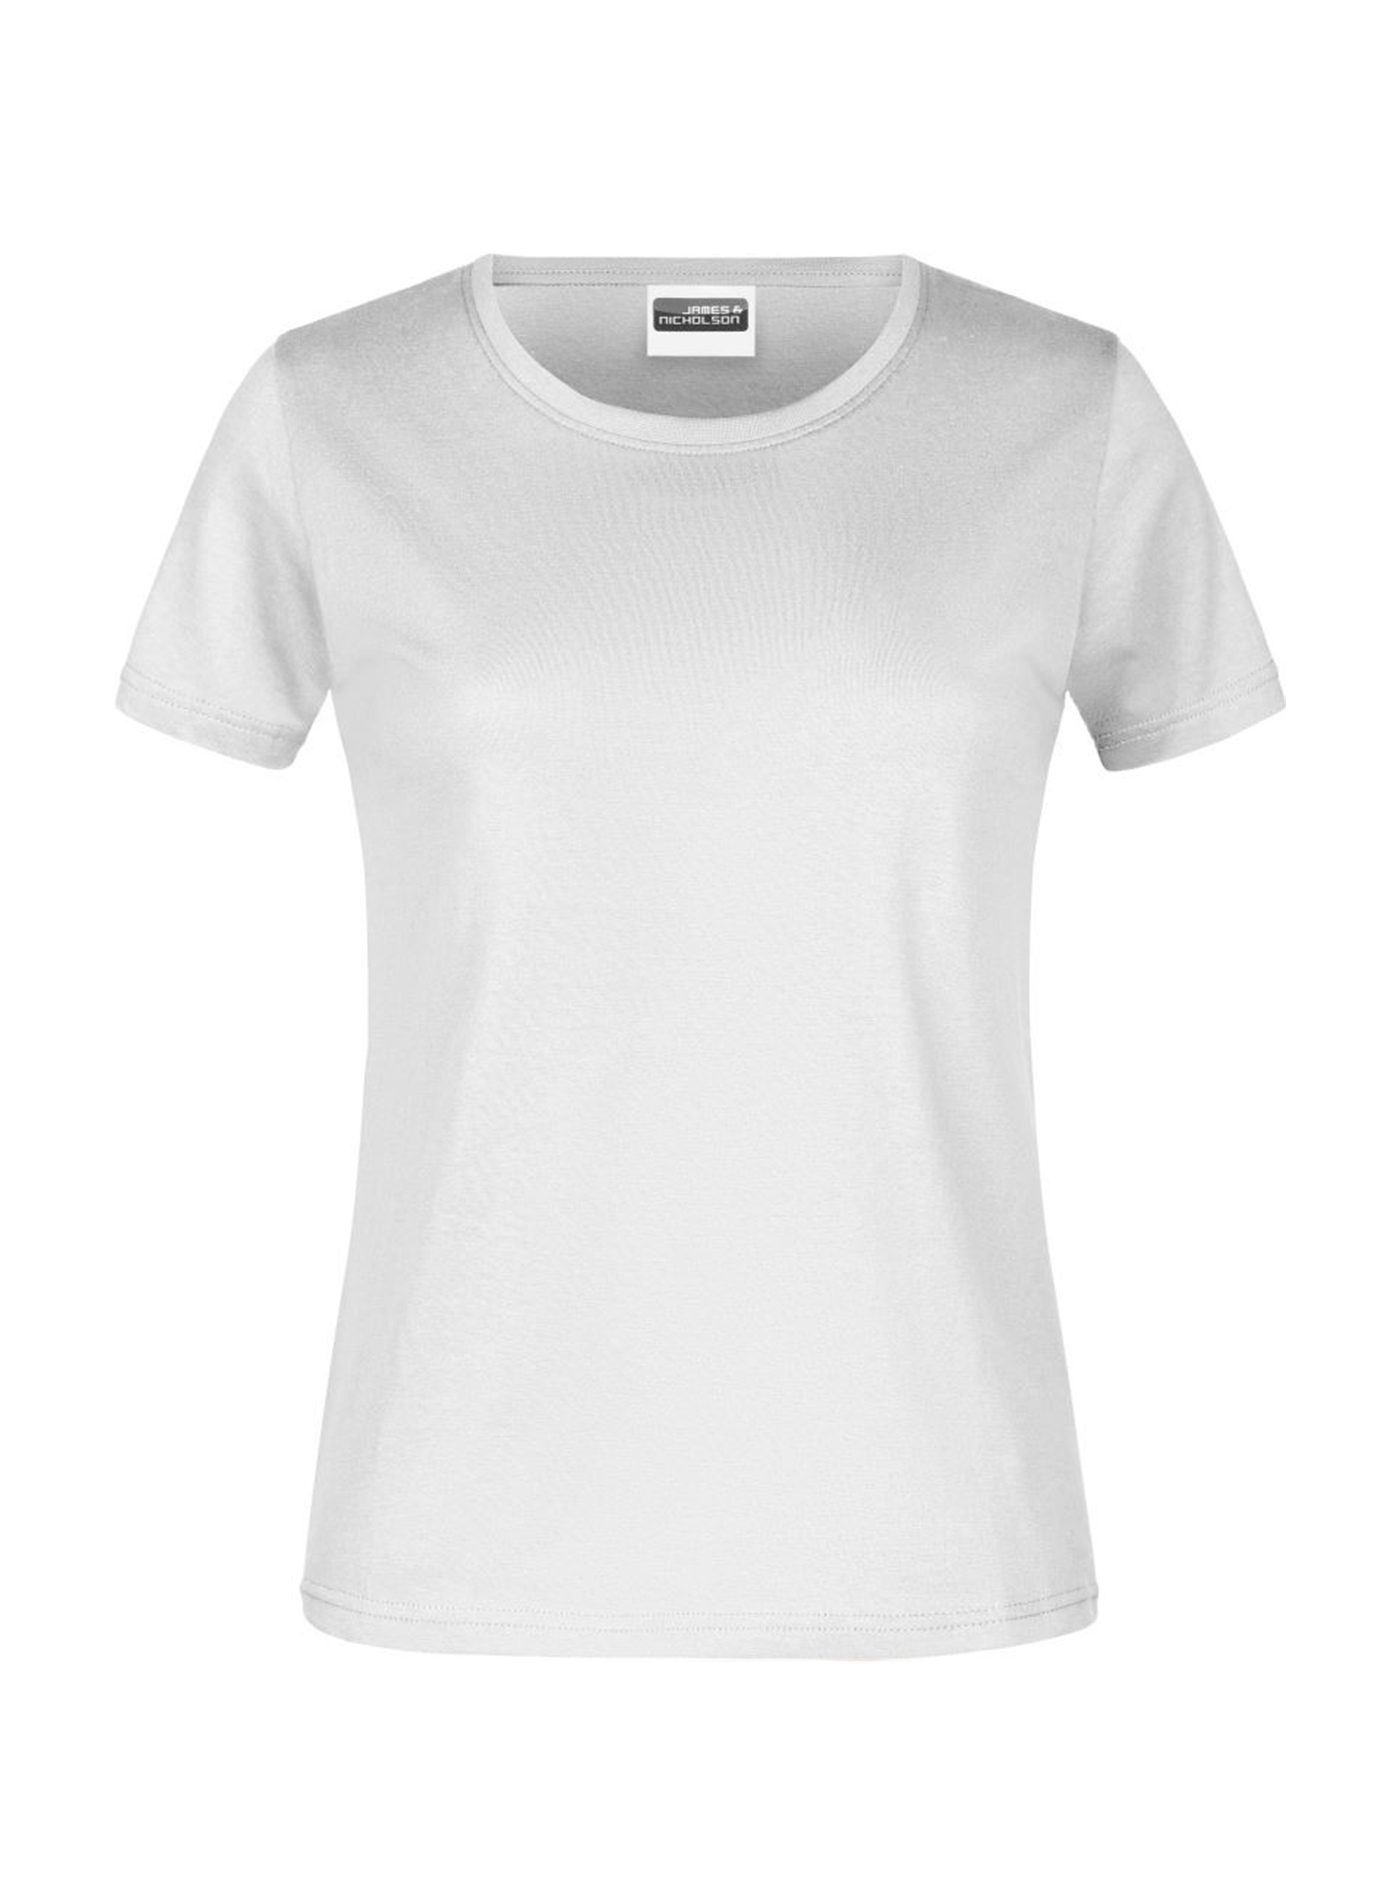 Dámské tričko James & Nicholson basic - Bílá XS